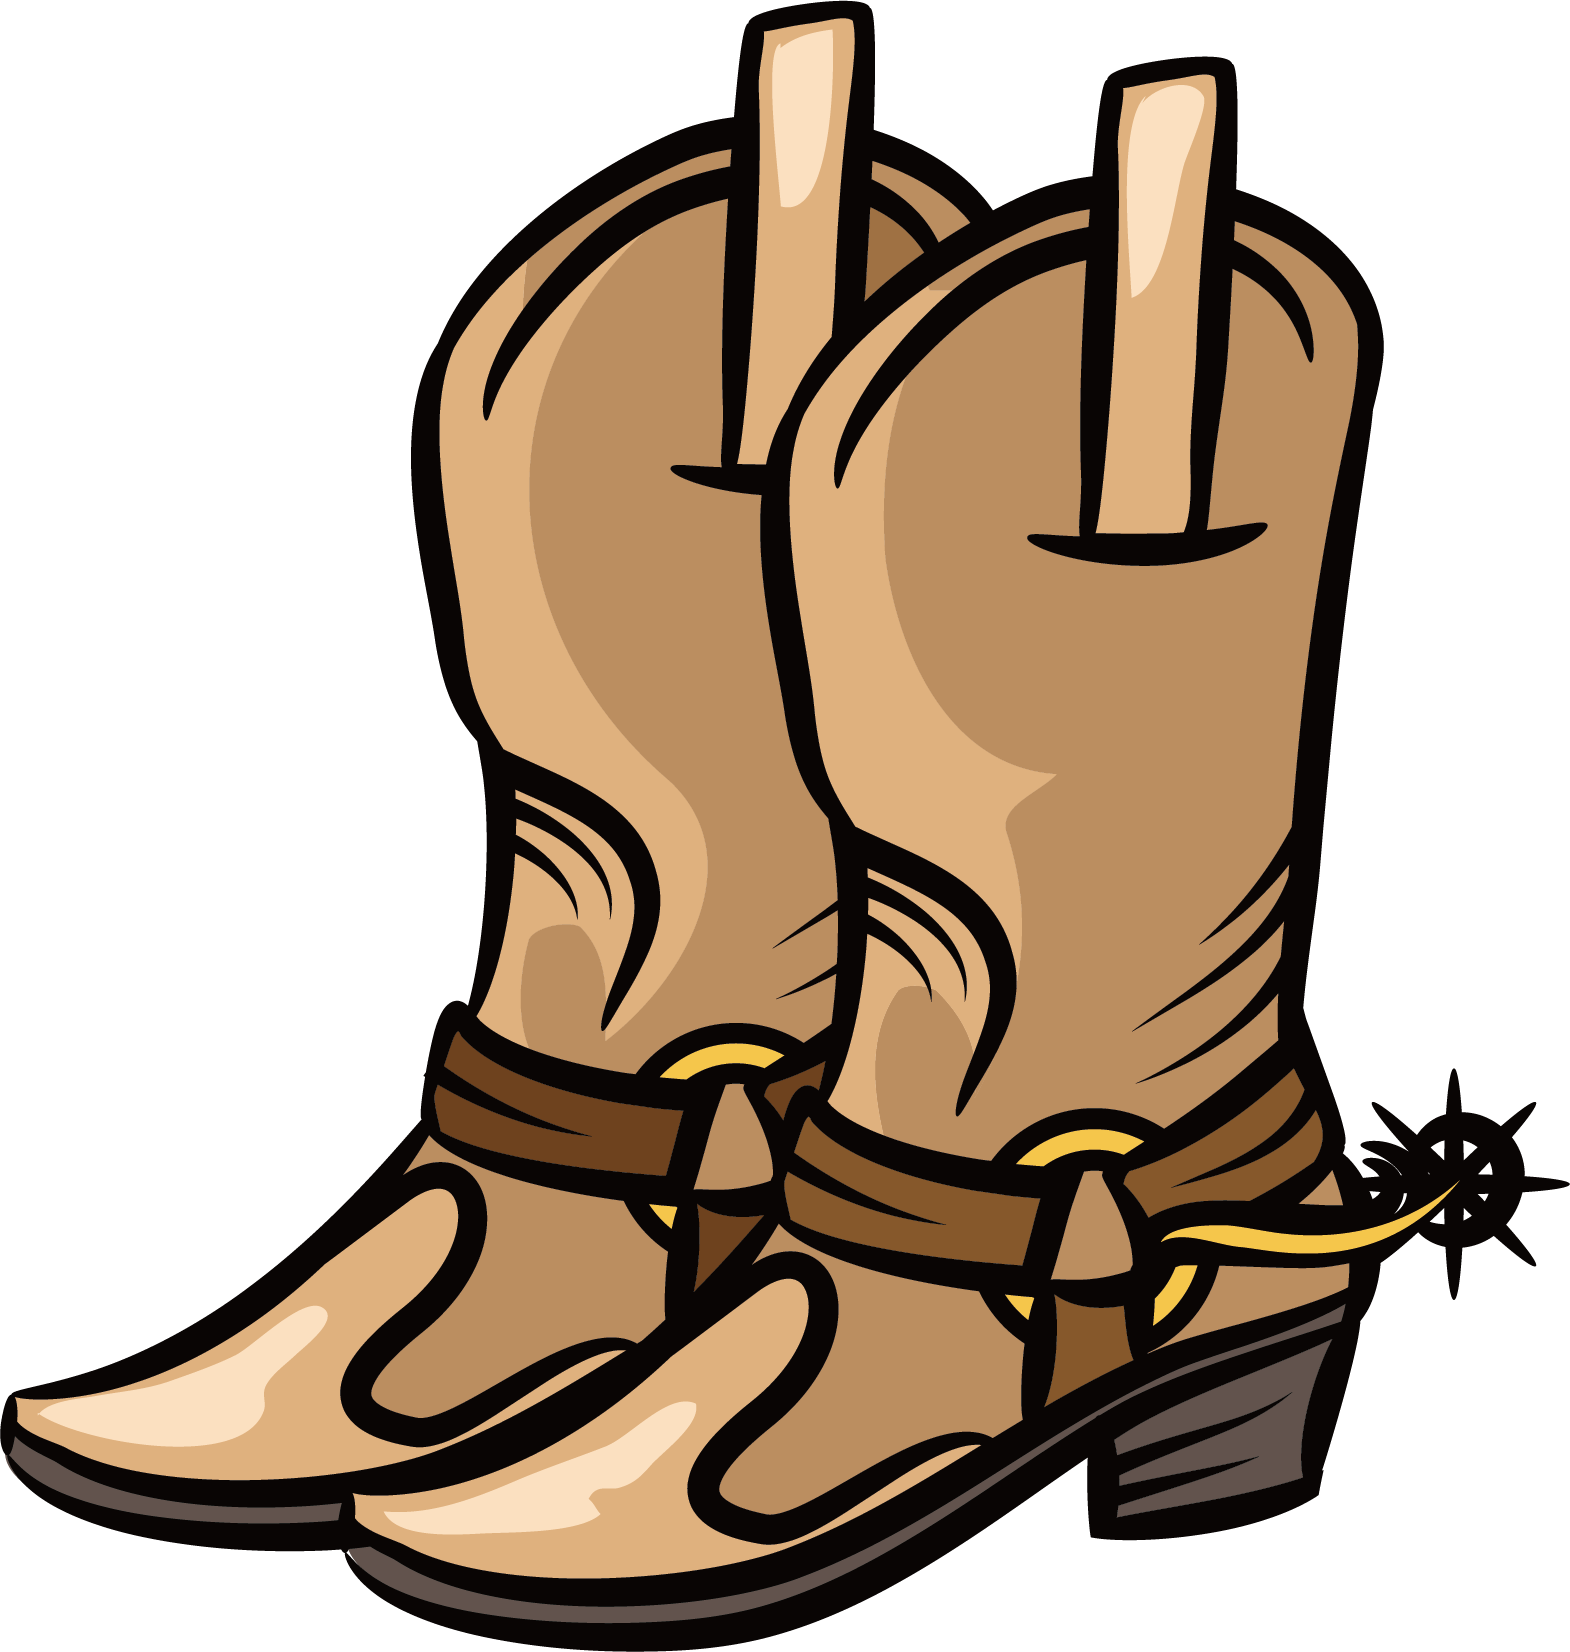 Cowboy boot Shoe Clip art - Boots png vector material png download ...